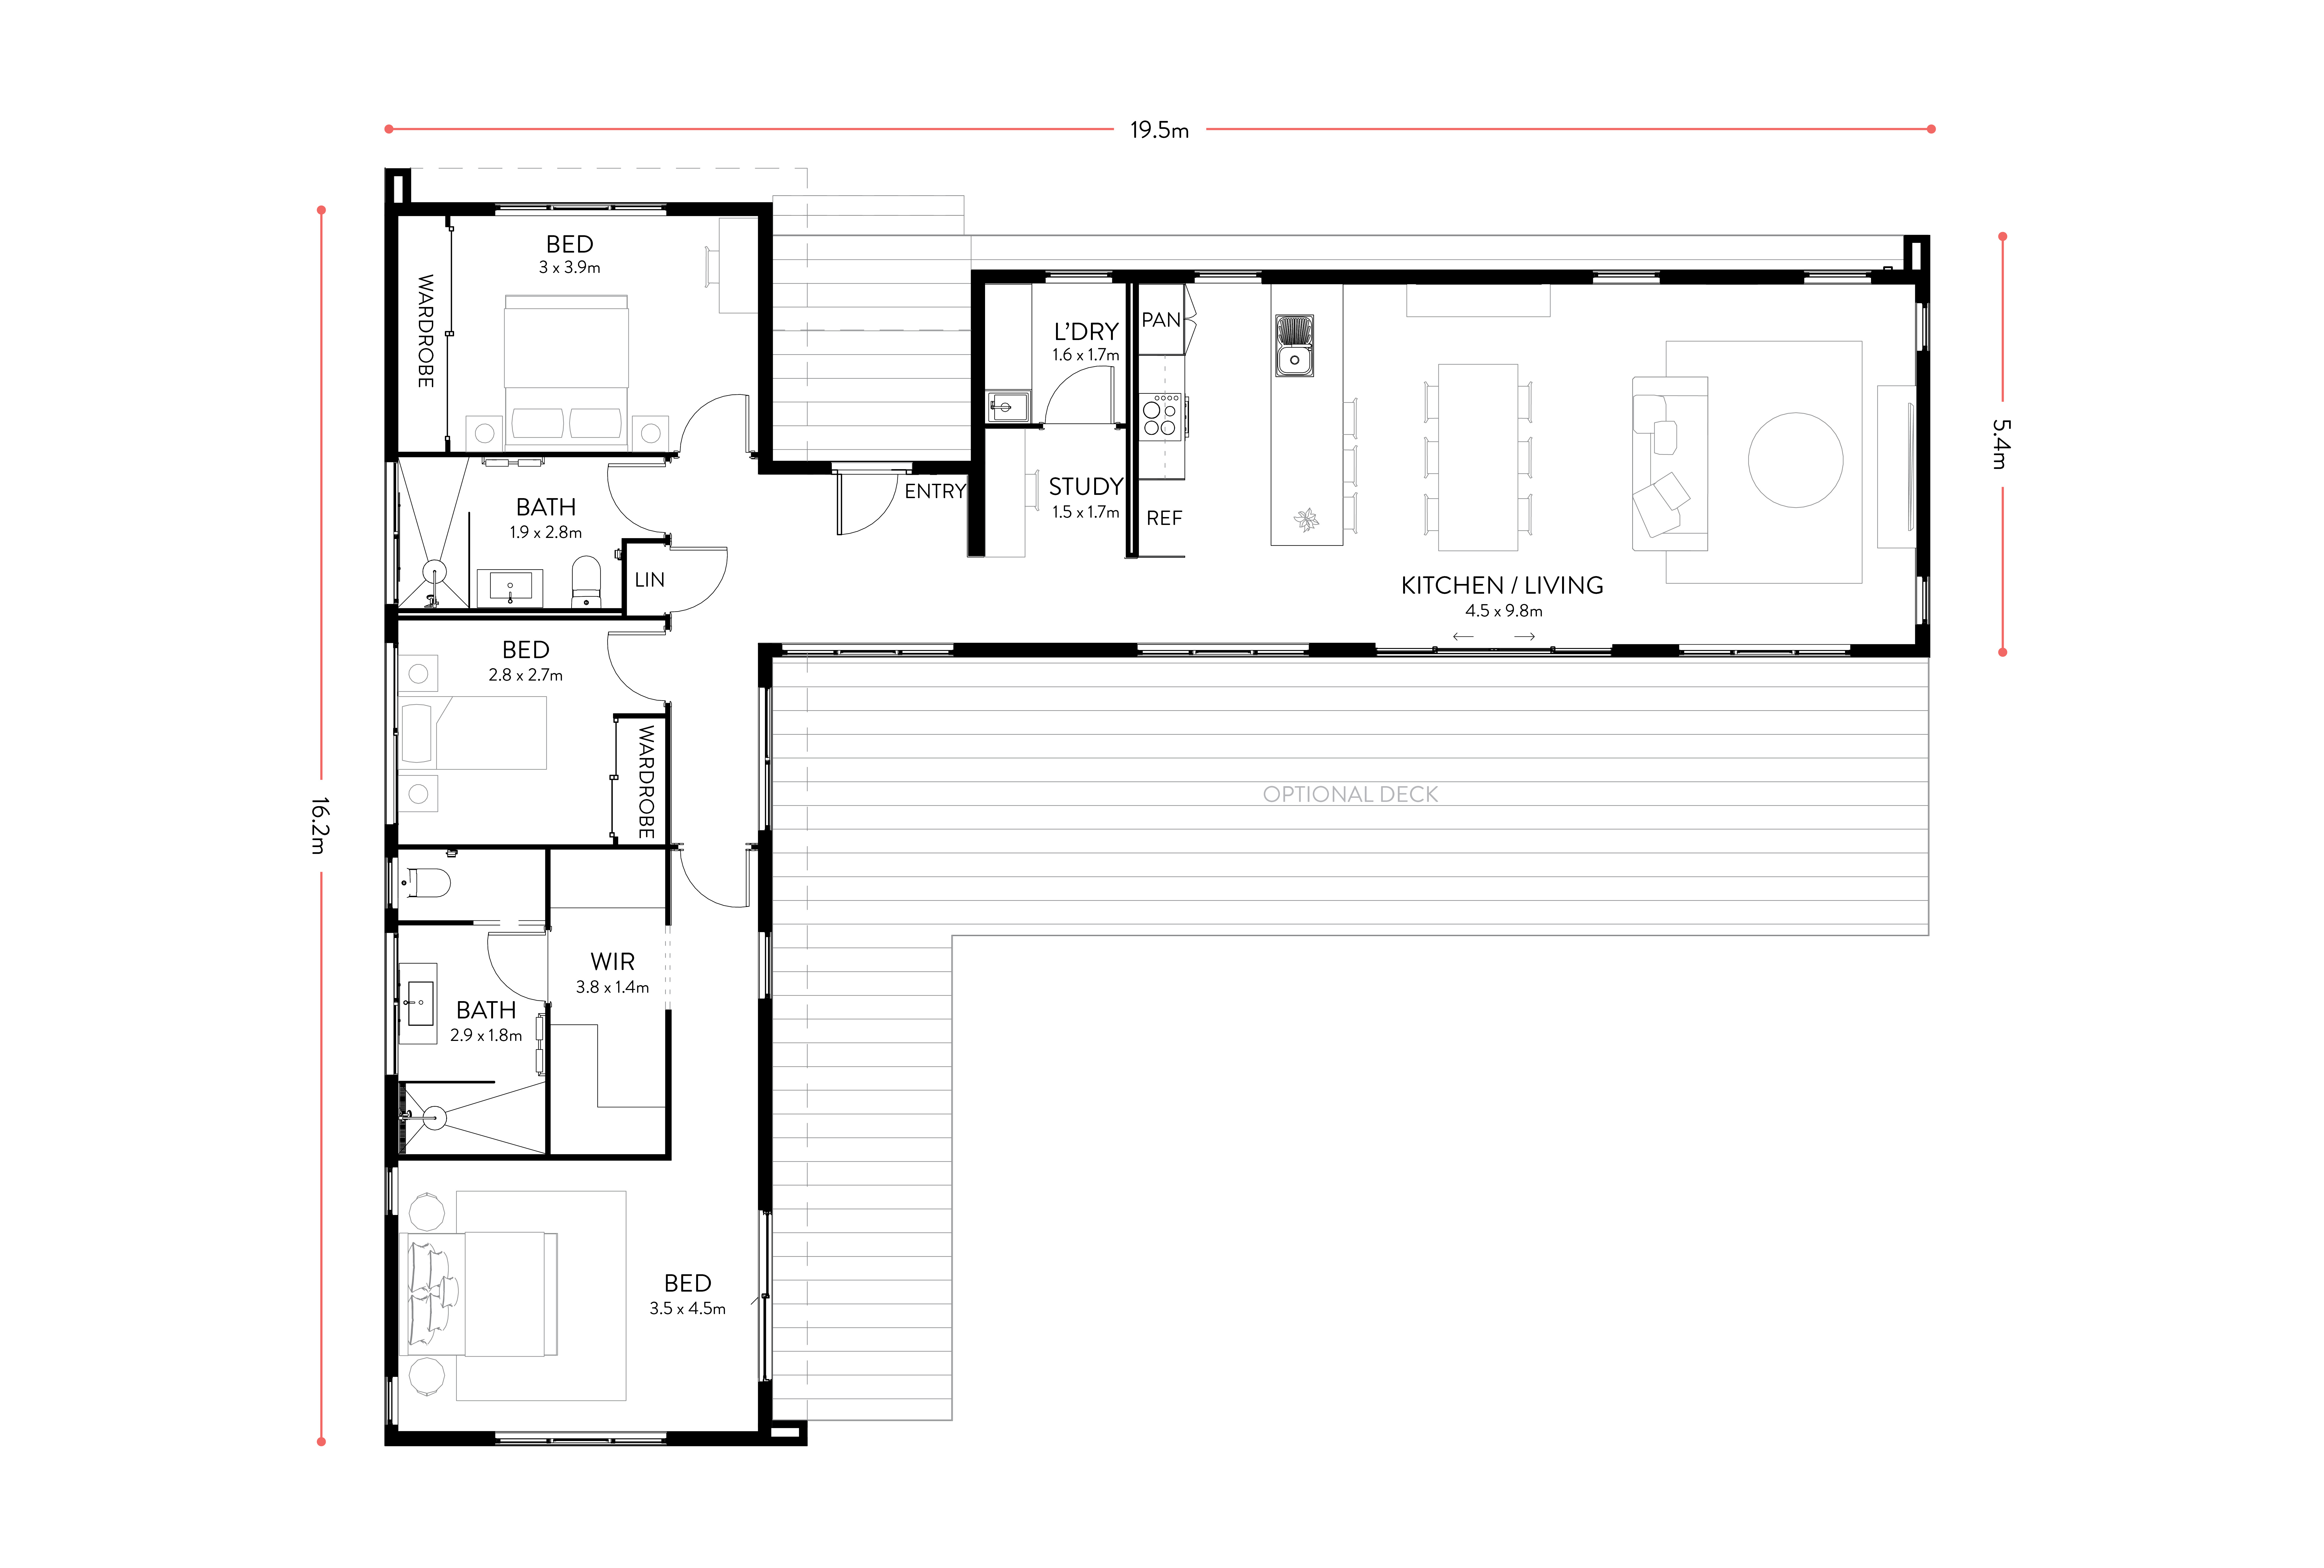 Floorplan of PLACEit modular home - Escape